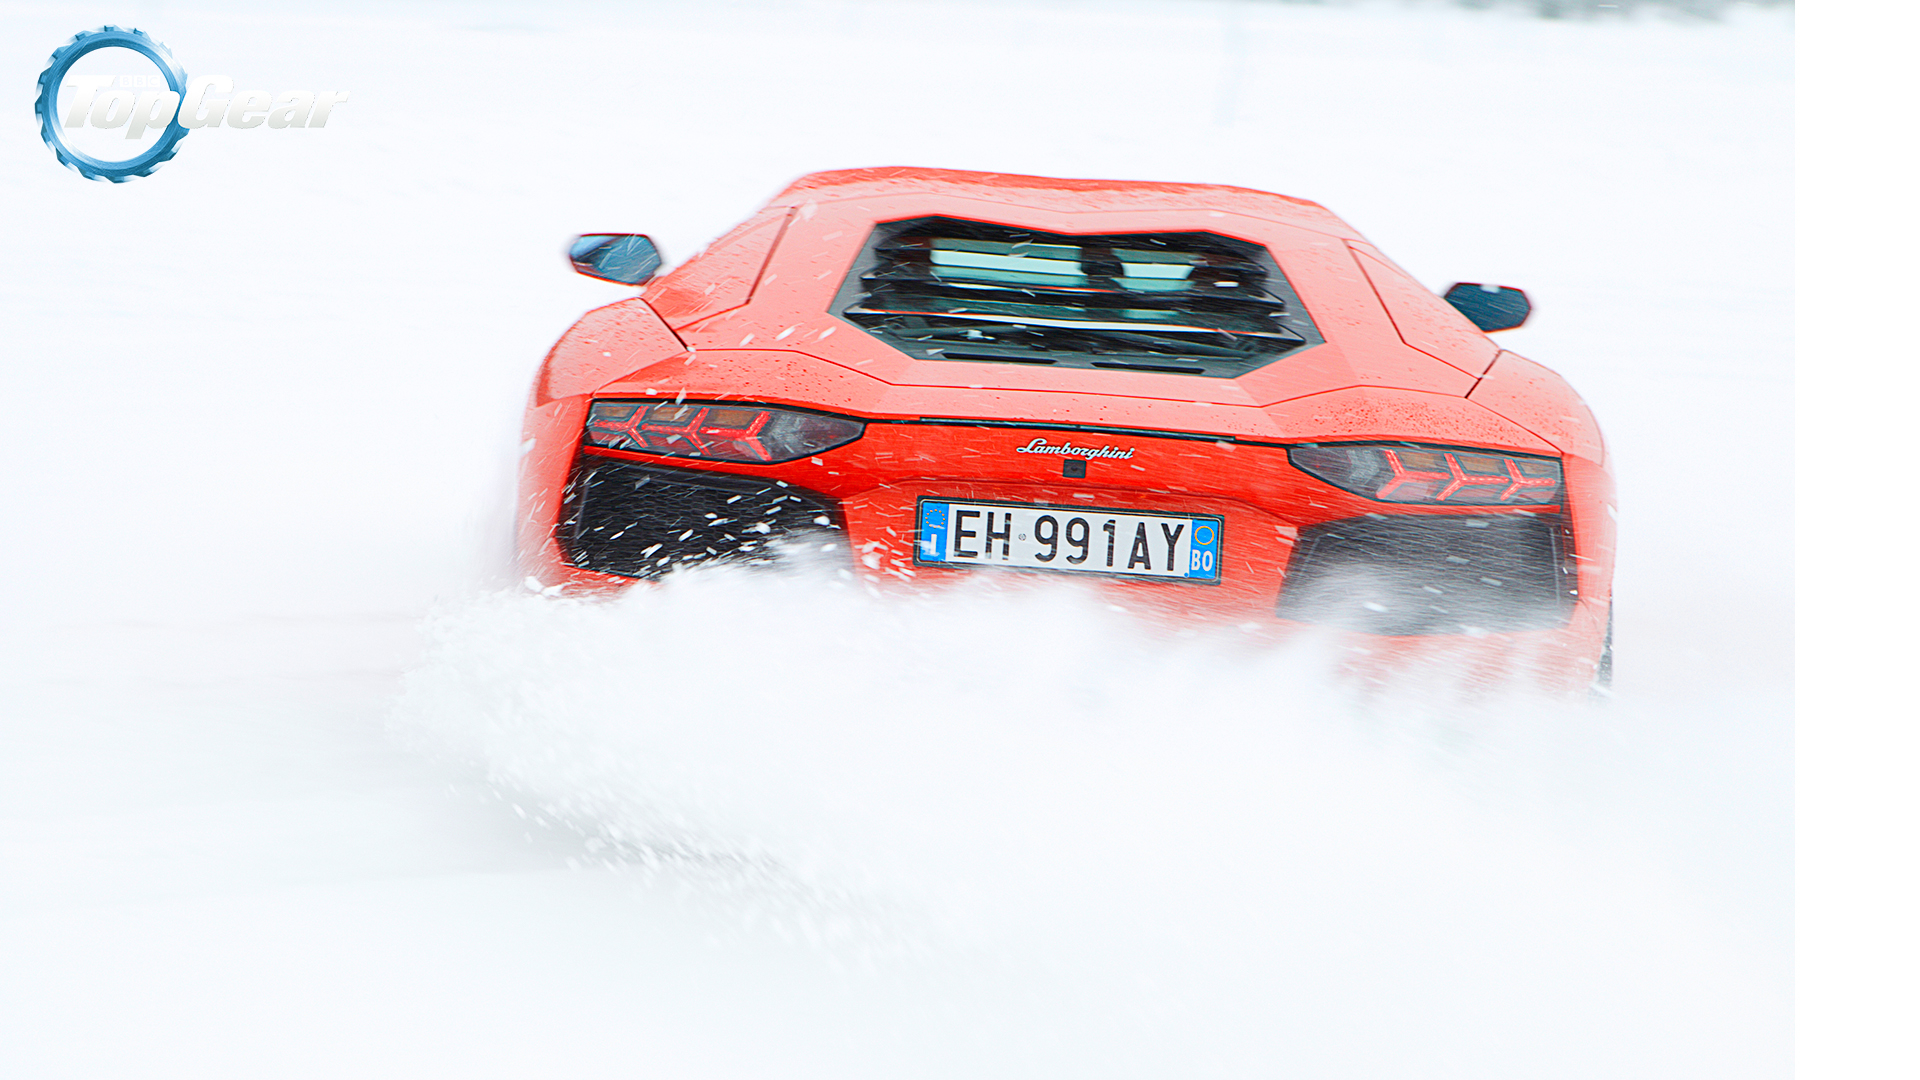 1920x1080 Top Gear's finest cars-and-snow photos | Top Gear